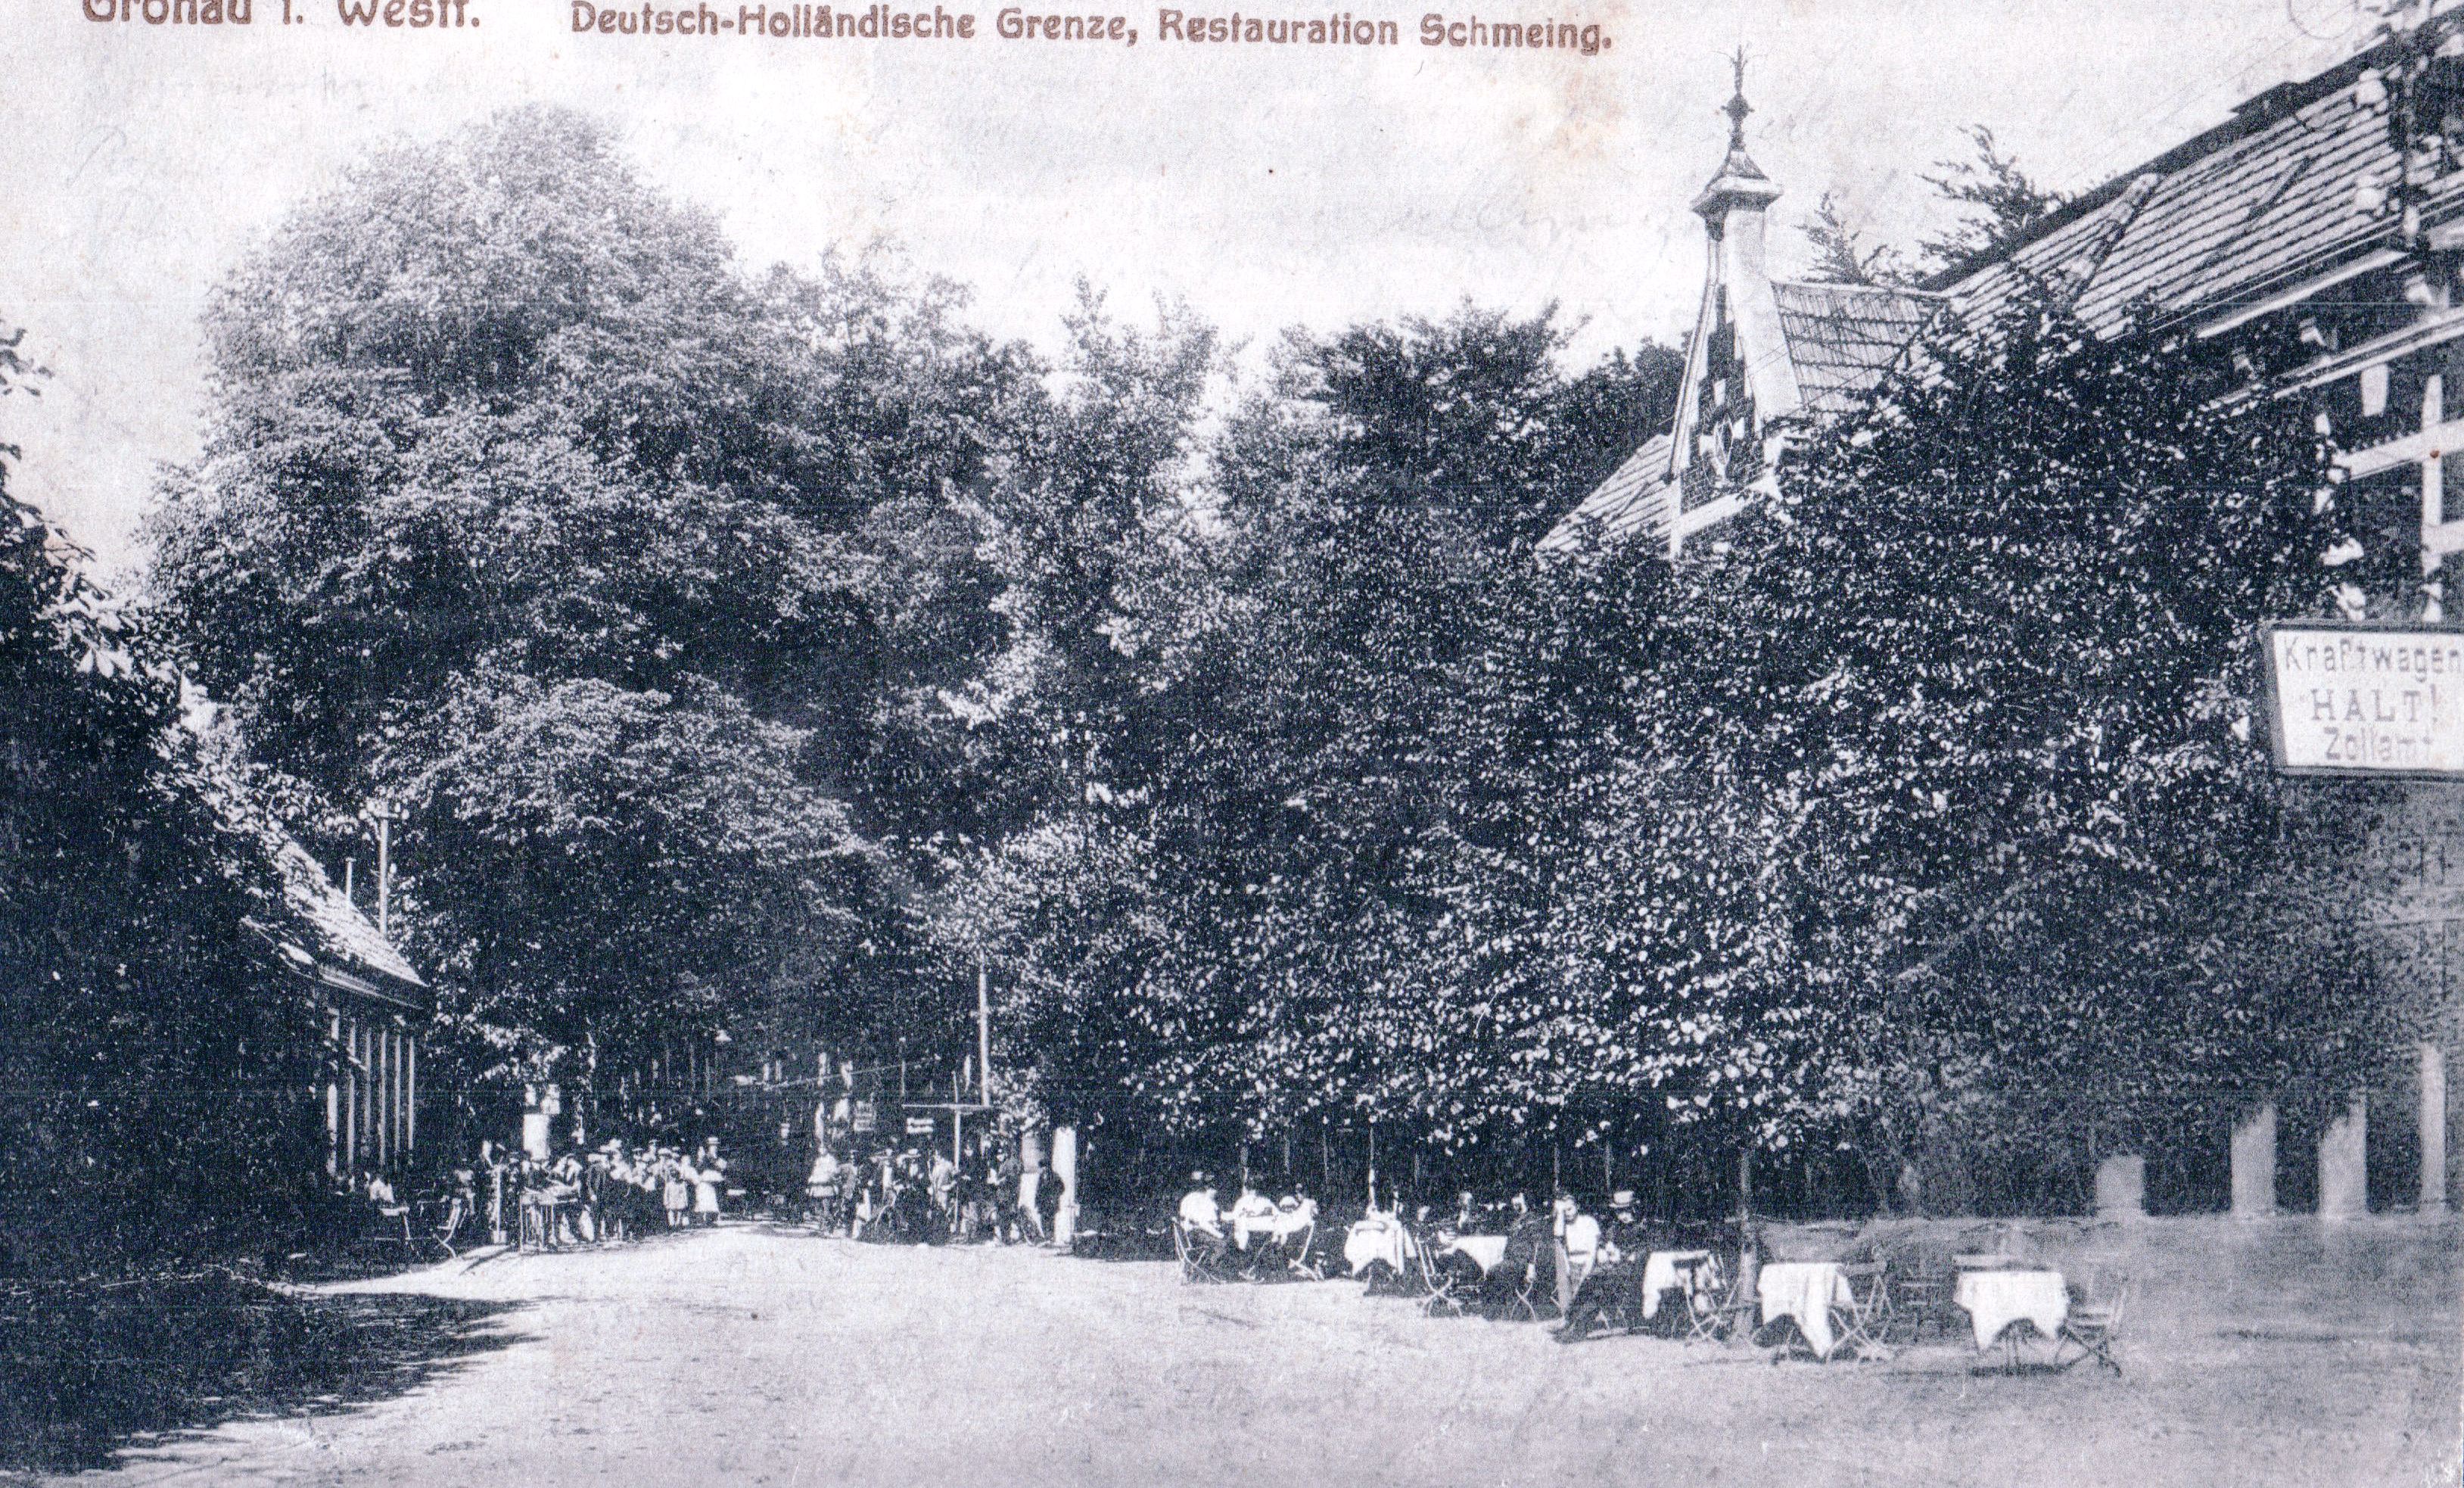 Glanerbrug-schmeing-1921-c6d1890c.jpg